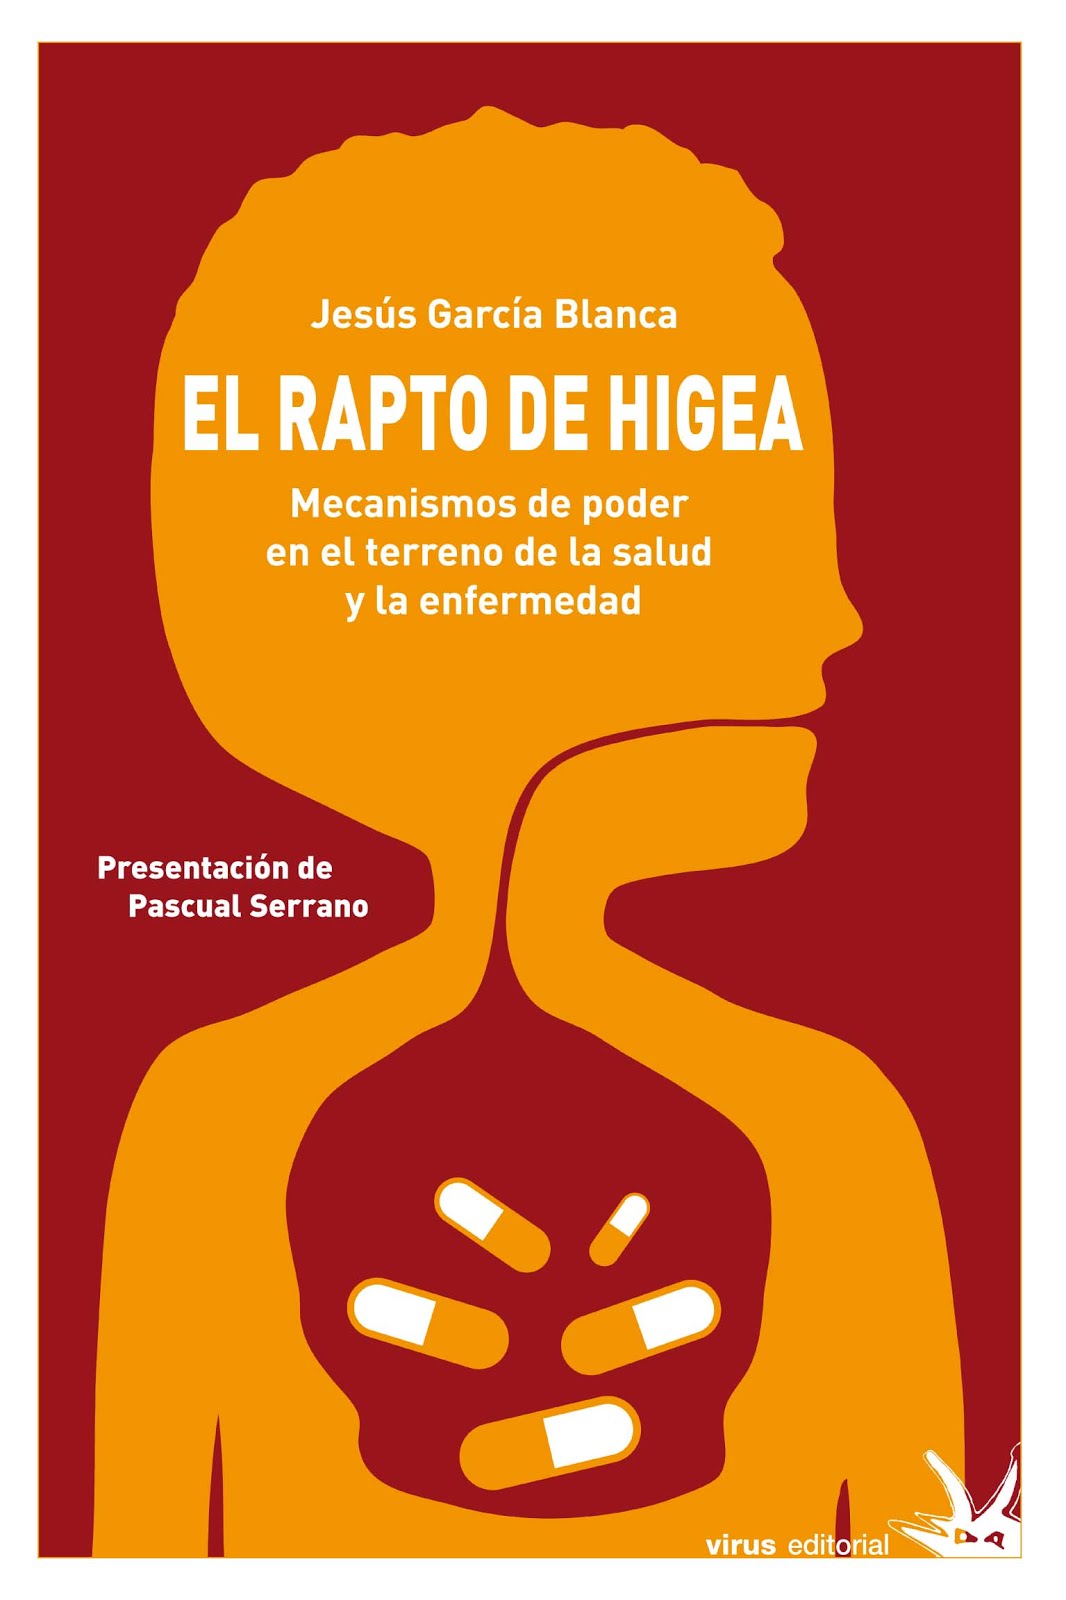 EL RAPTO DE HIGEA (Virus, 2009)